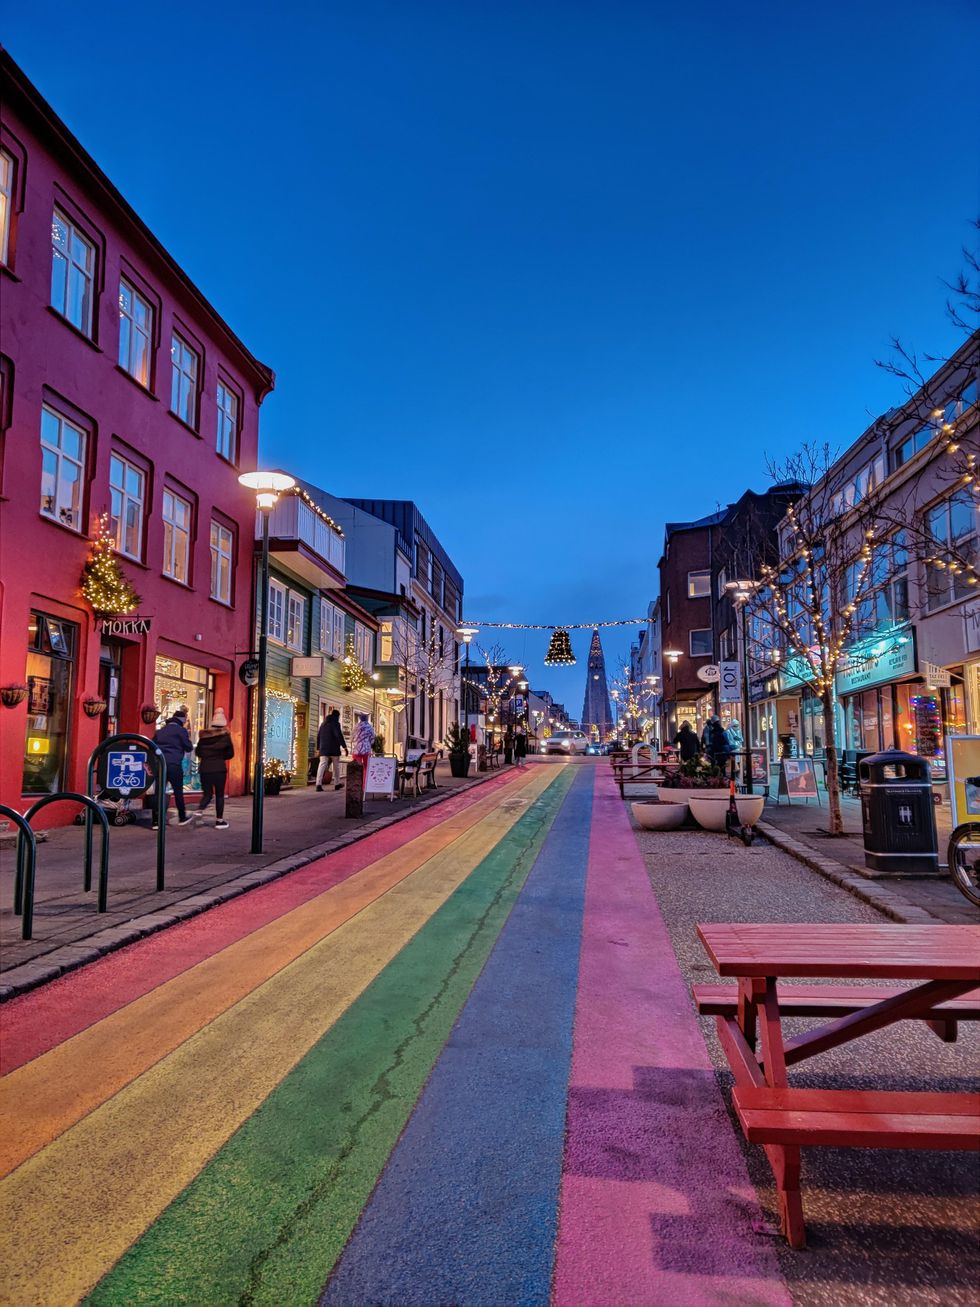 Rainbow street in Reykjavic, Iceland